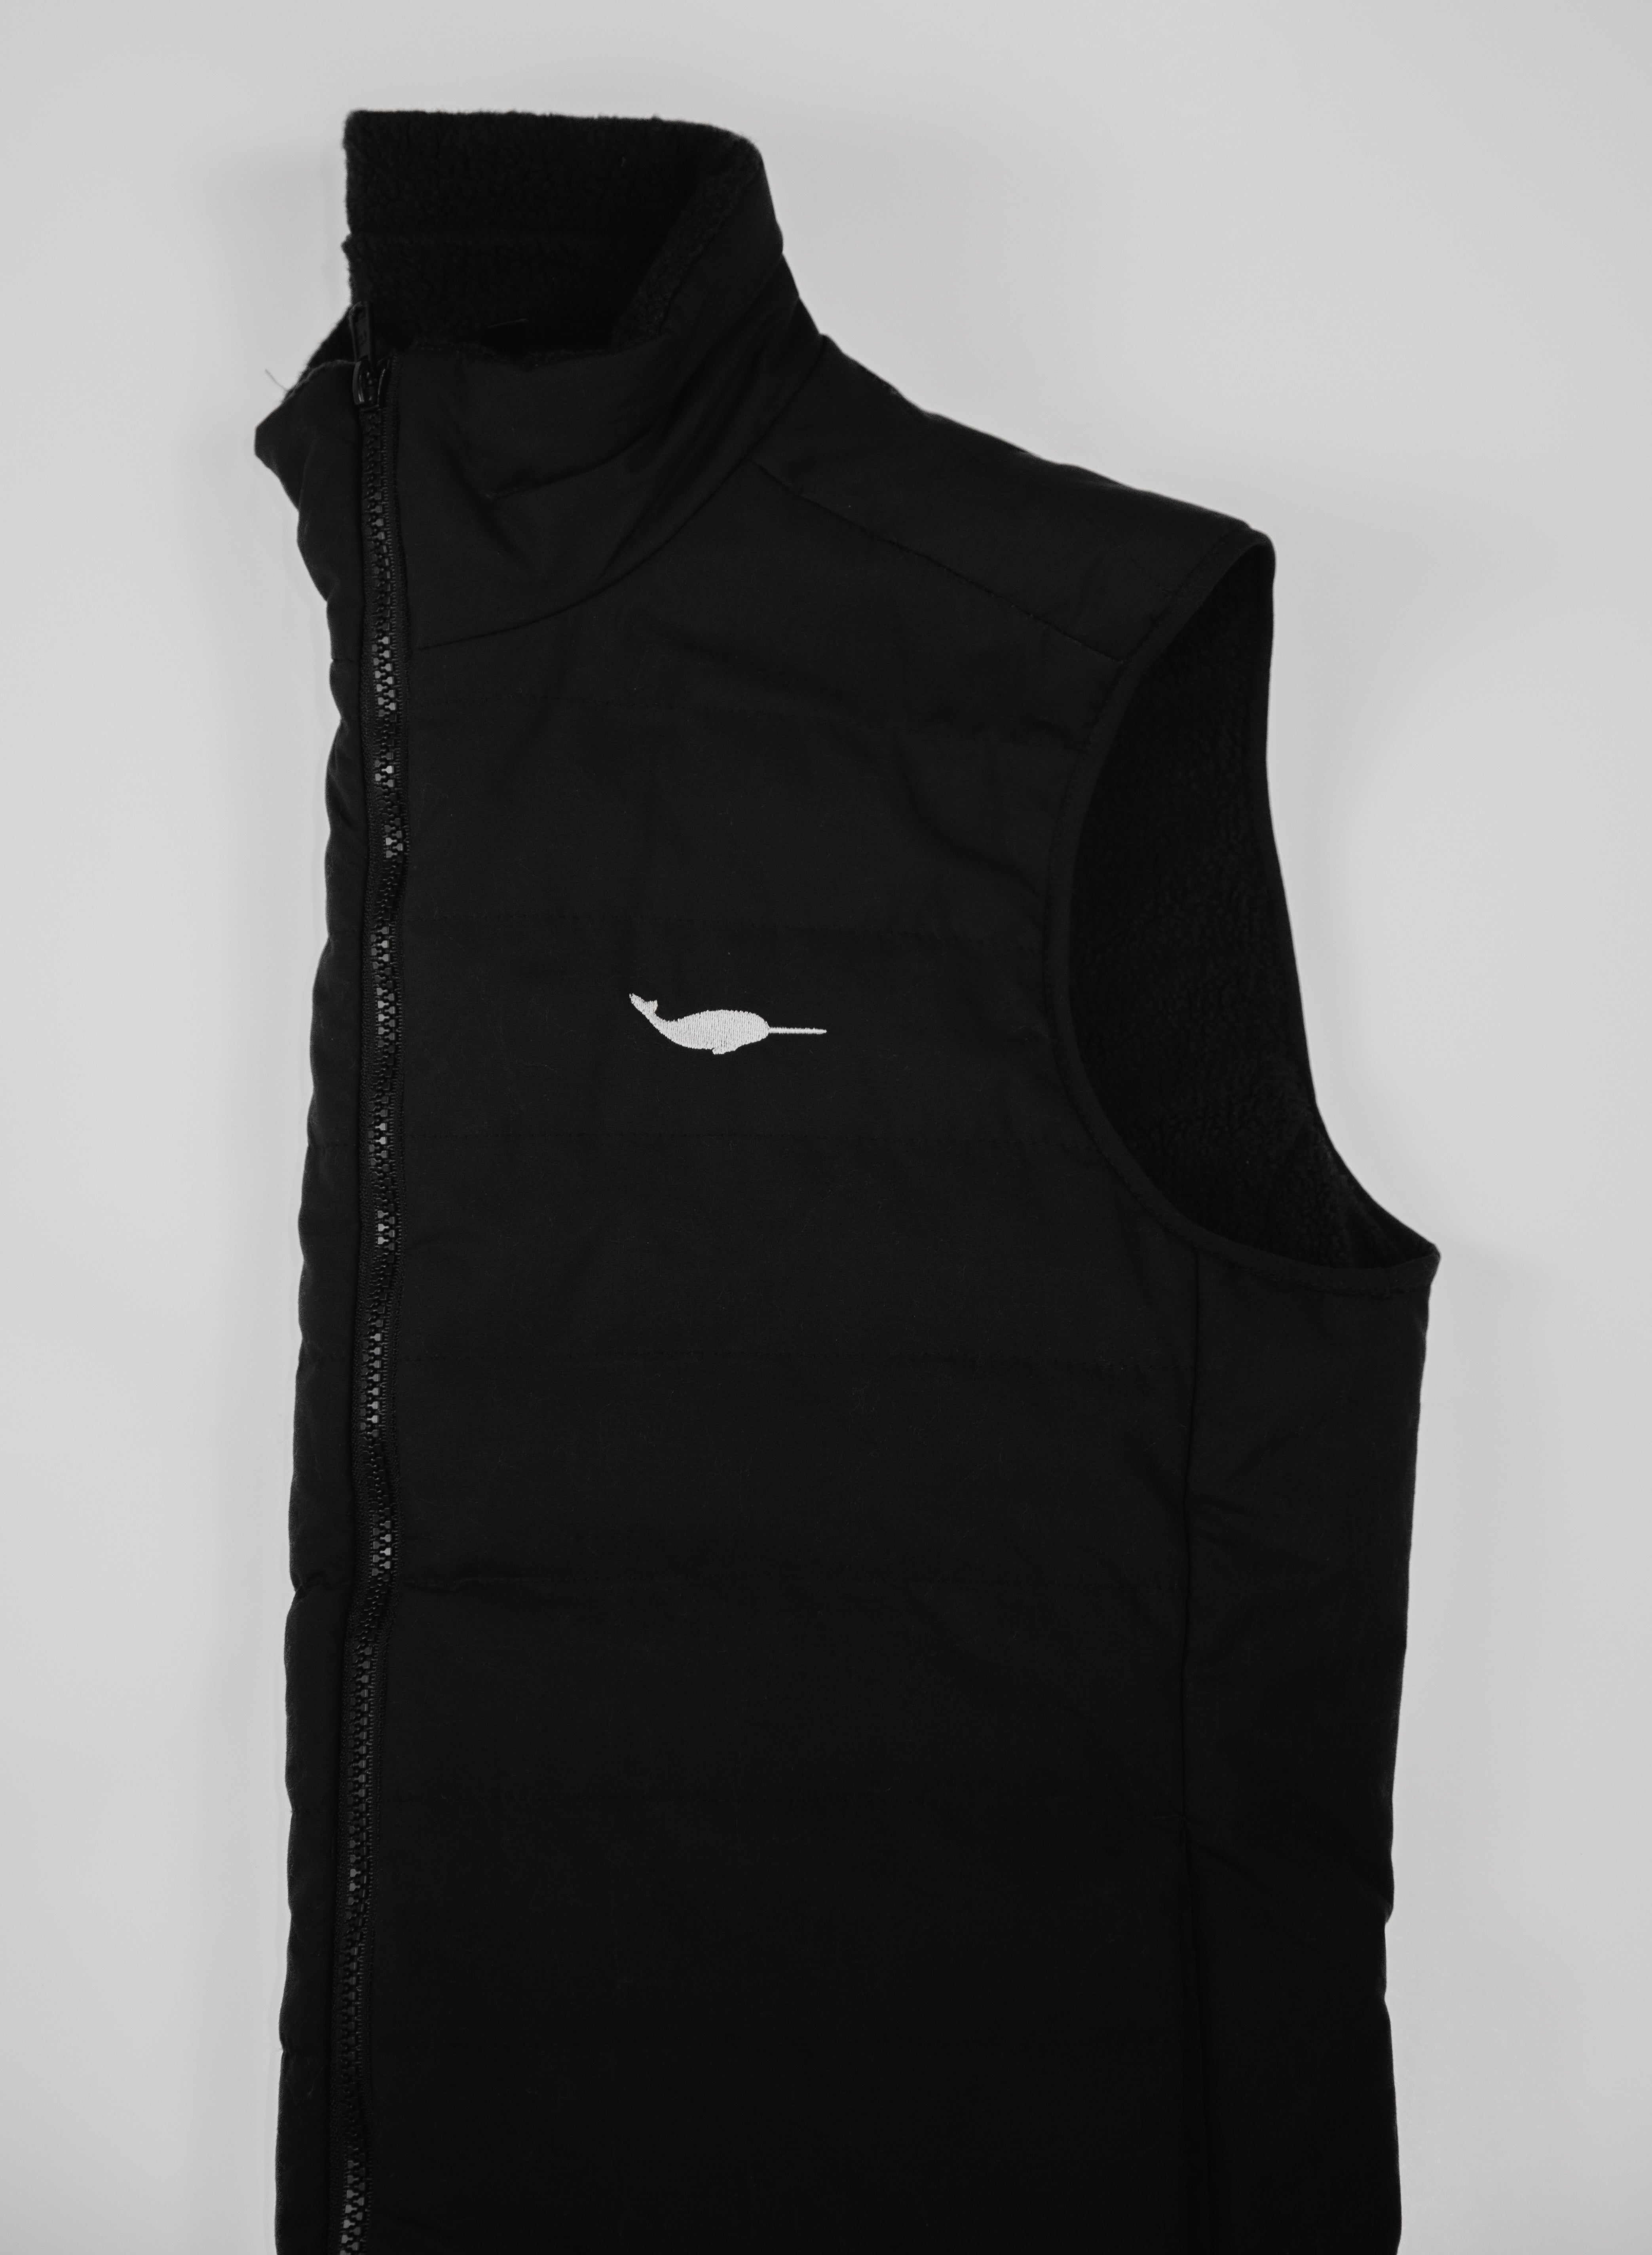 Sherpa lined sleeveless vest